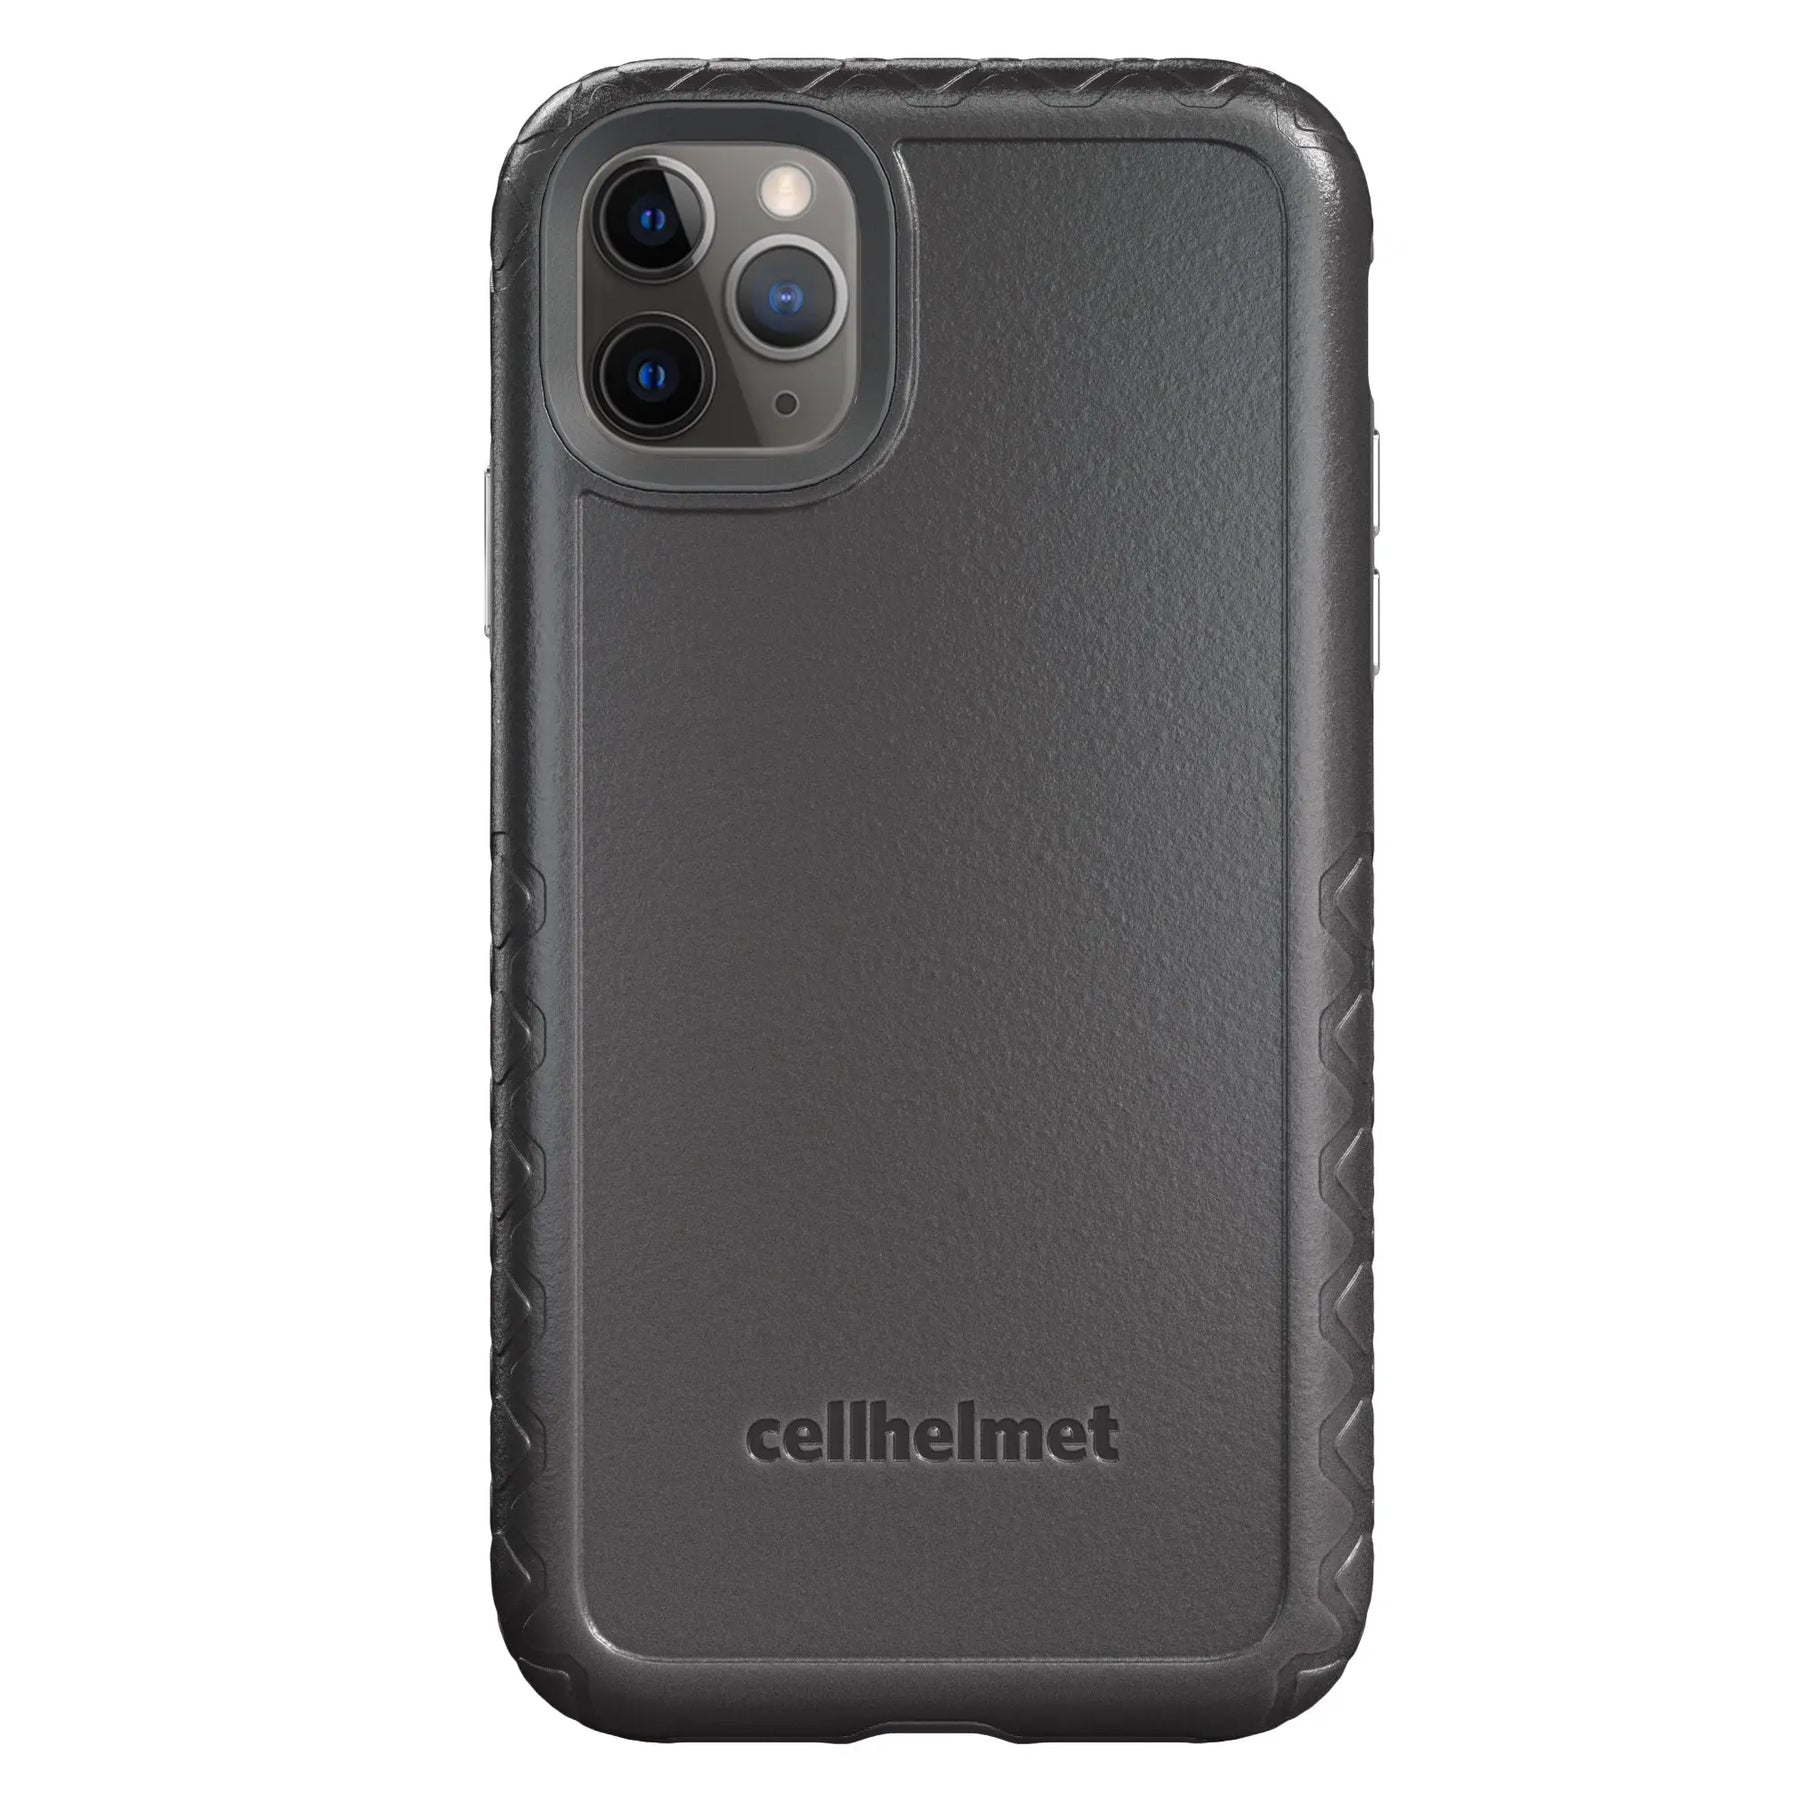 Black cellhelmet Customizable Case for iPhone 11 Pro Max